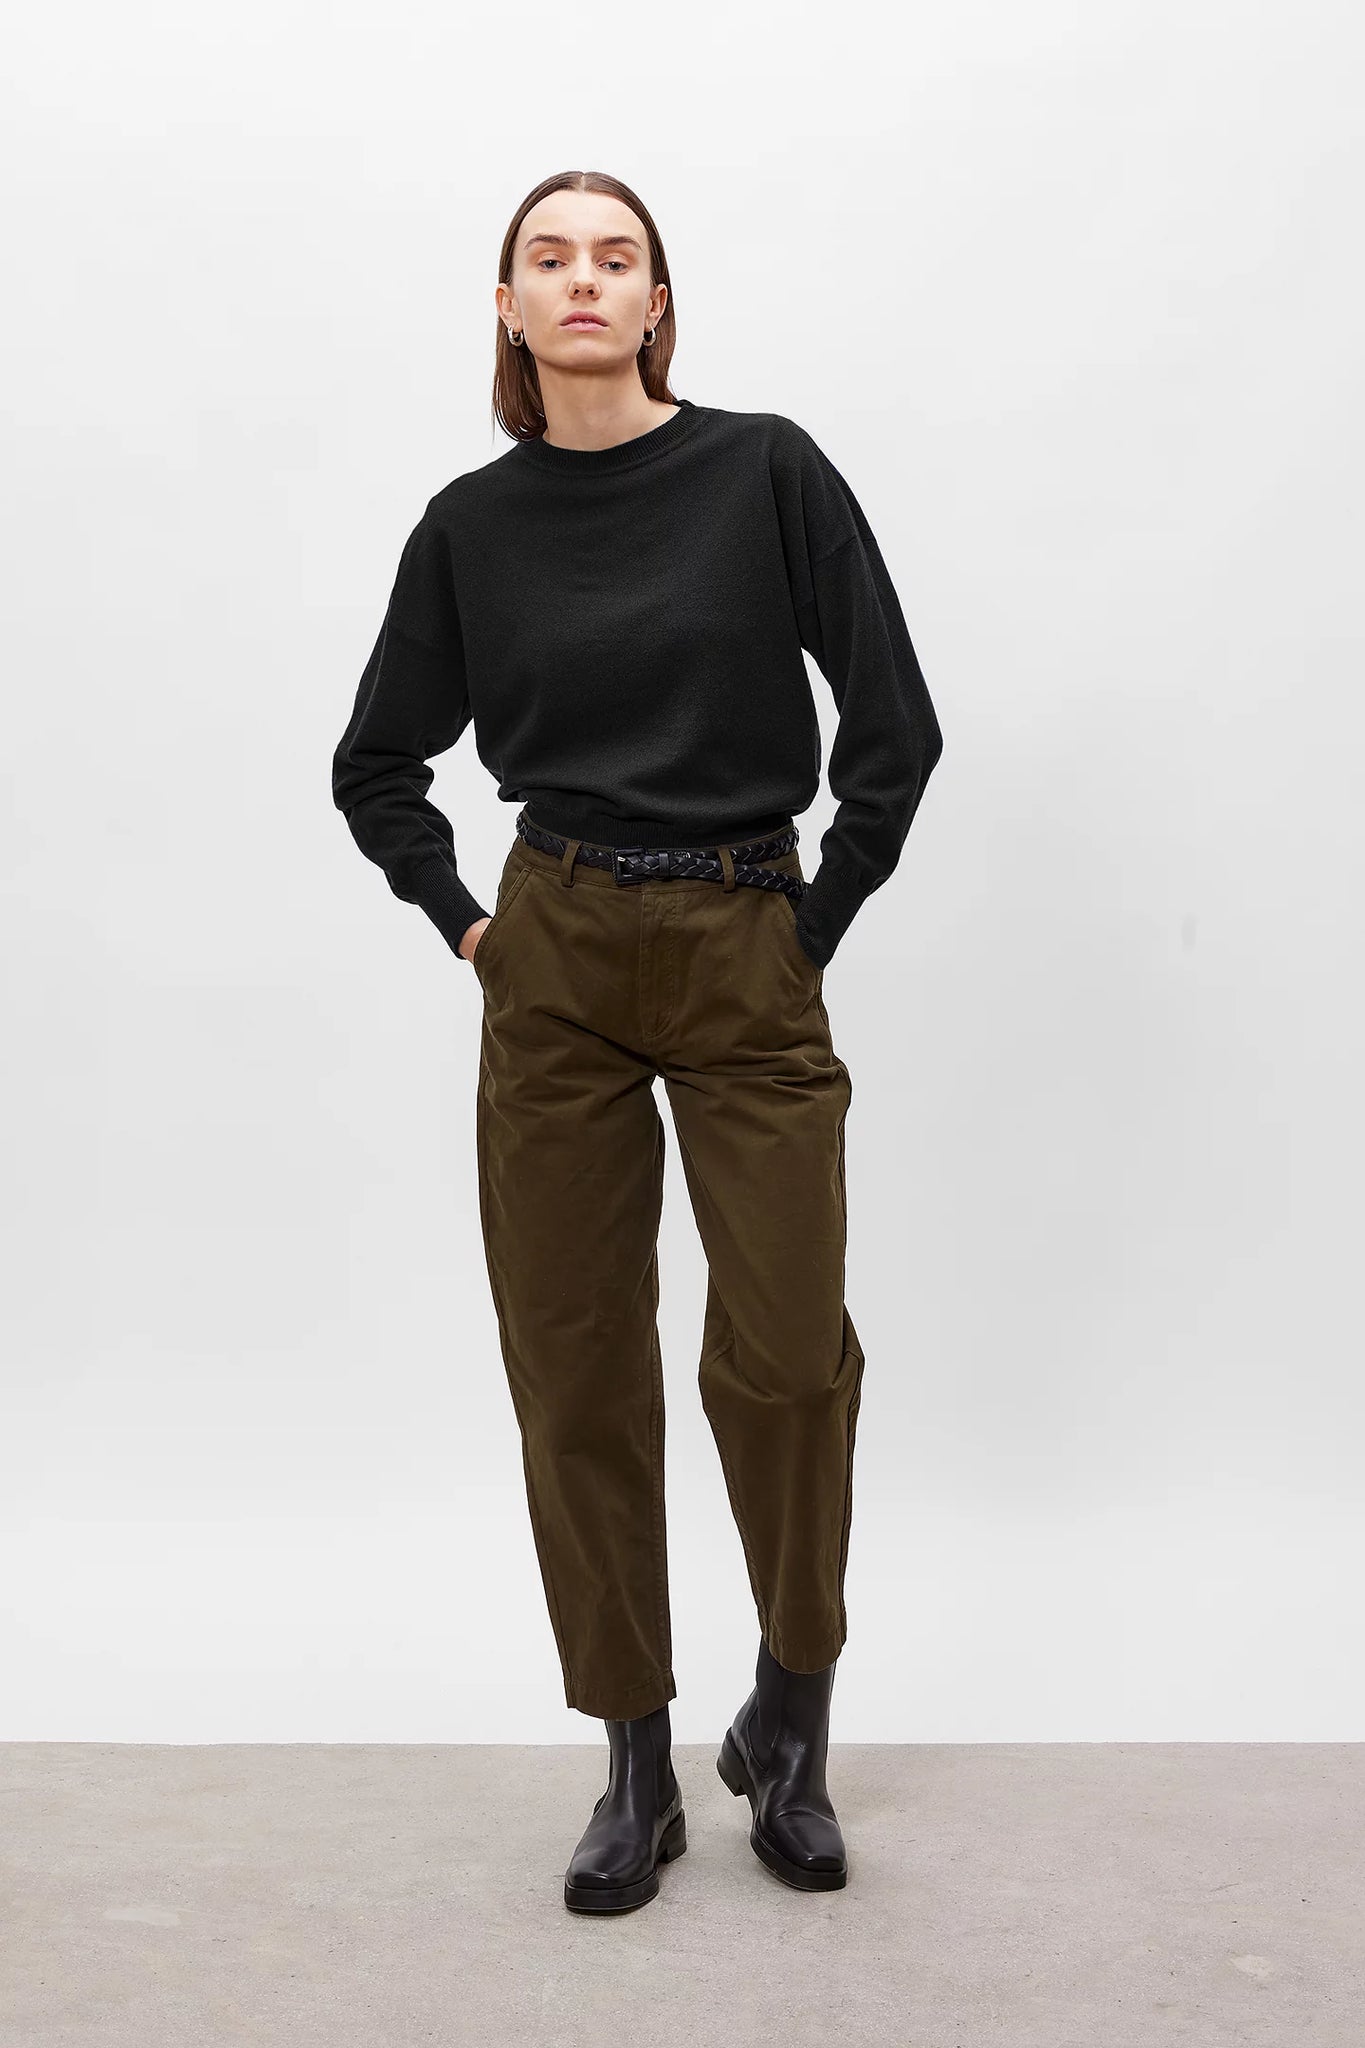 Ior cashmere wool sweater – Black